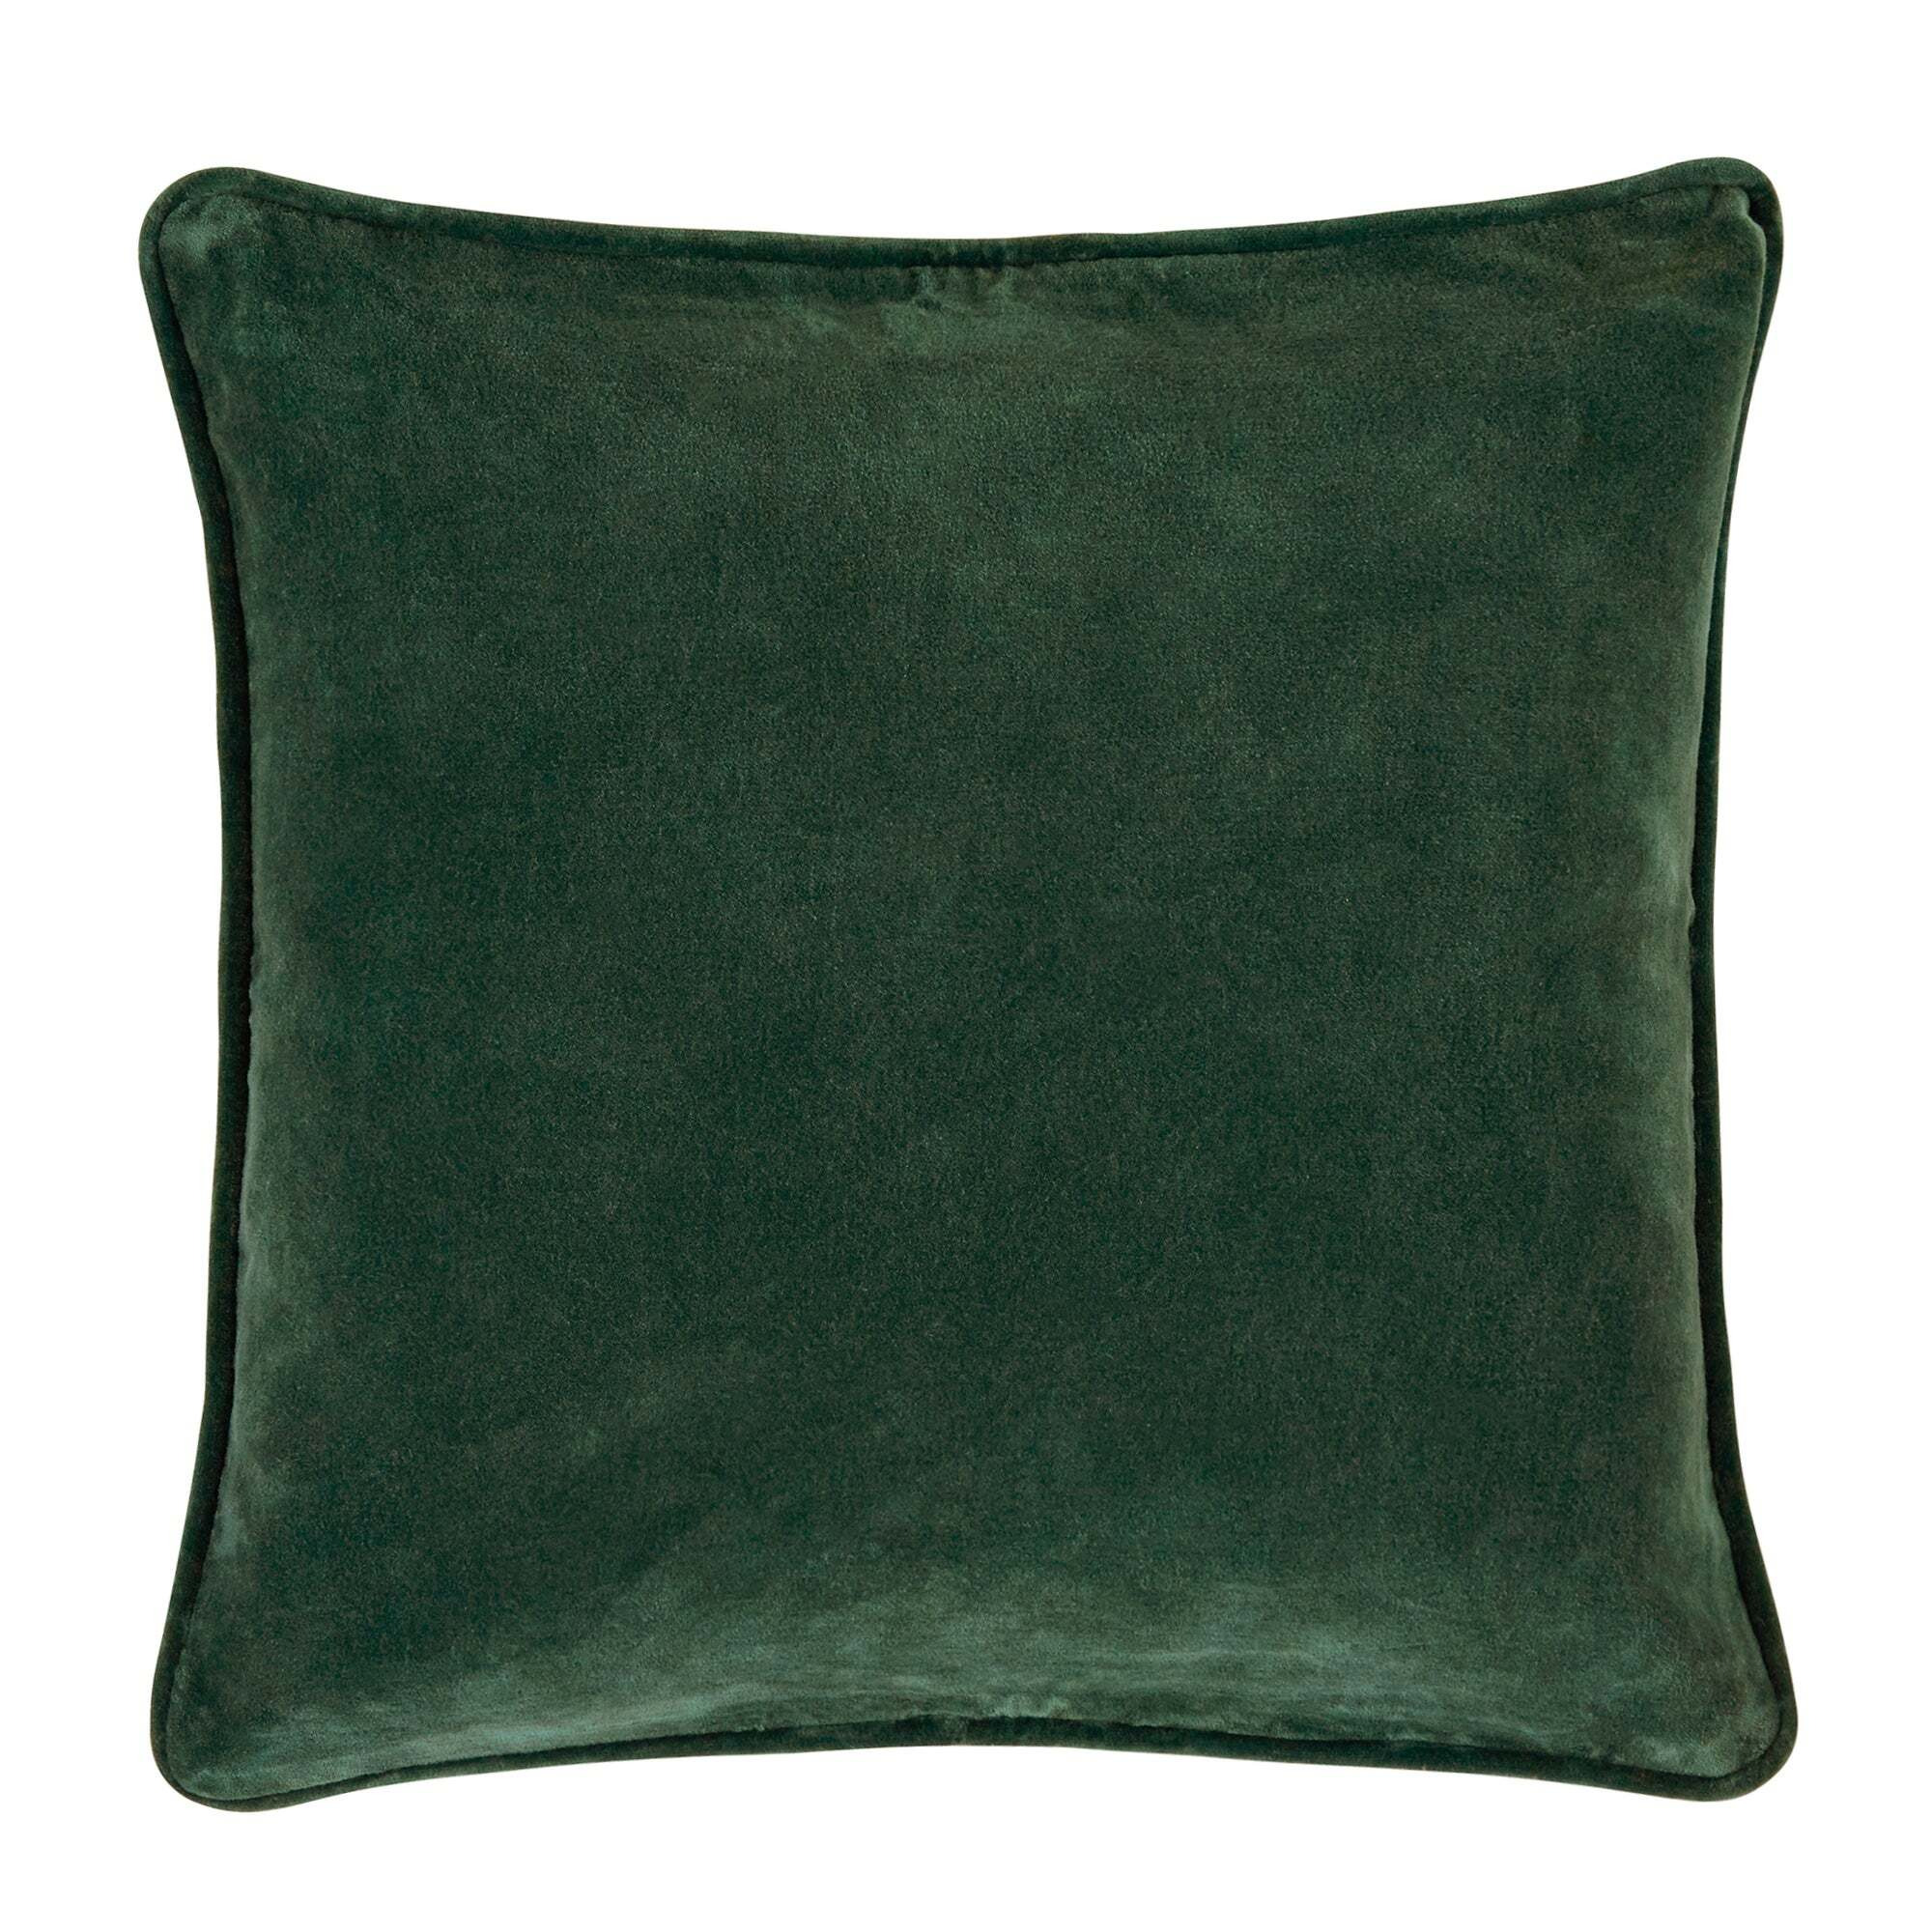 Clara Cotton Velvet Square Cushion Emerald (Green)